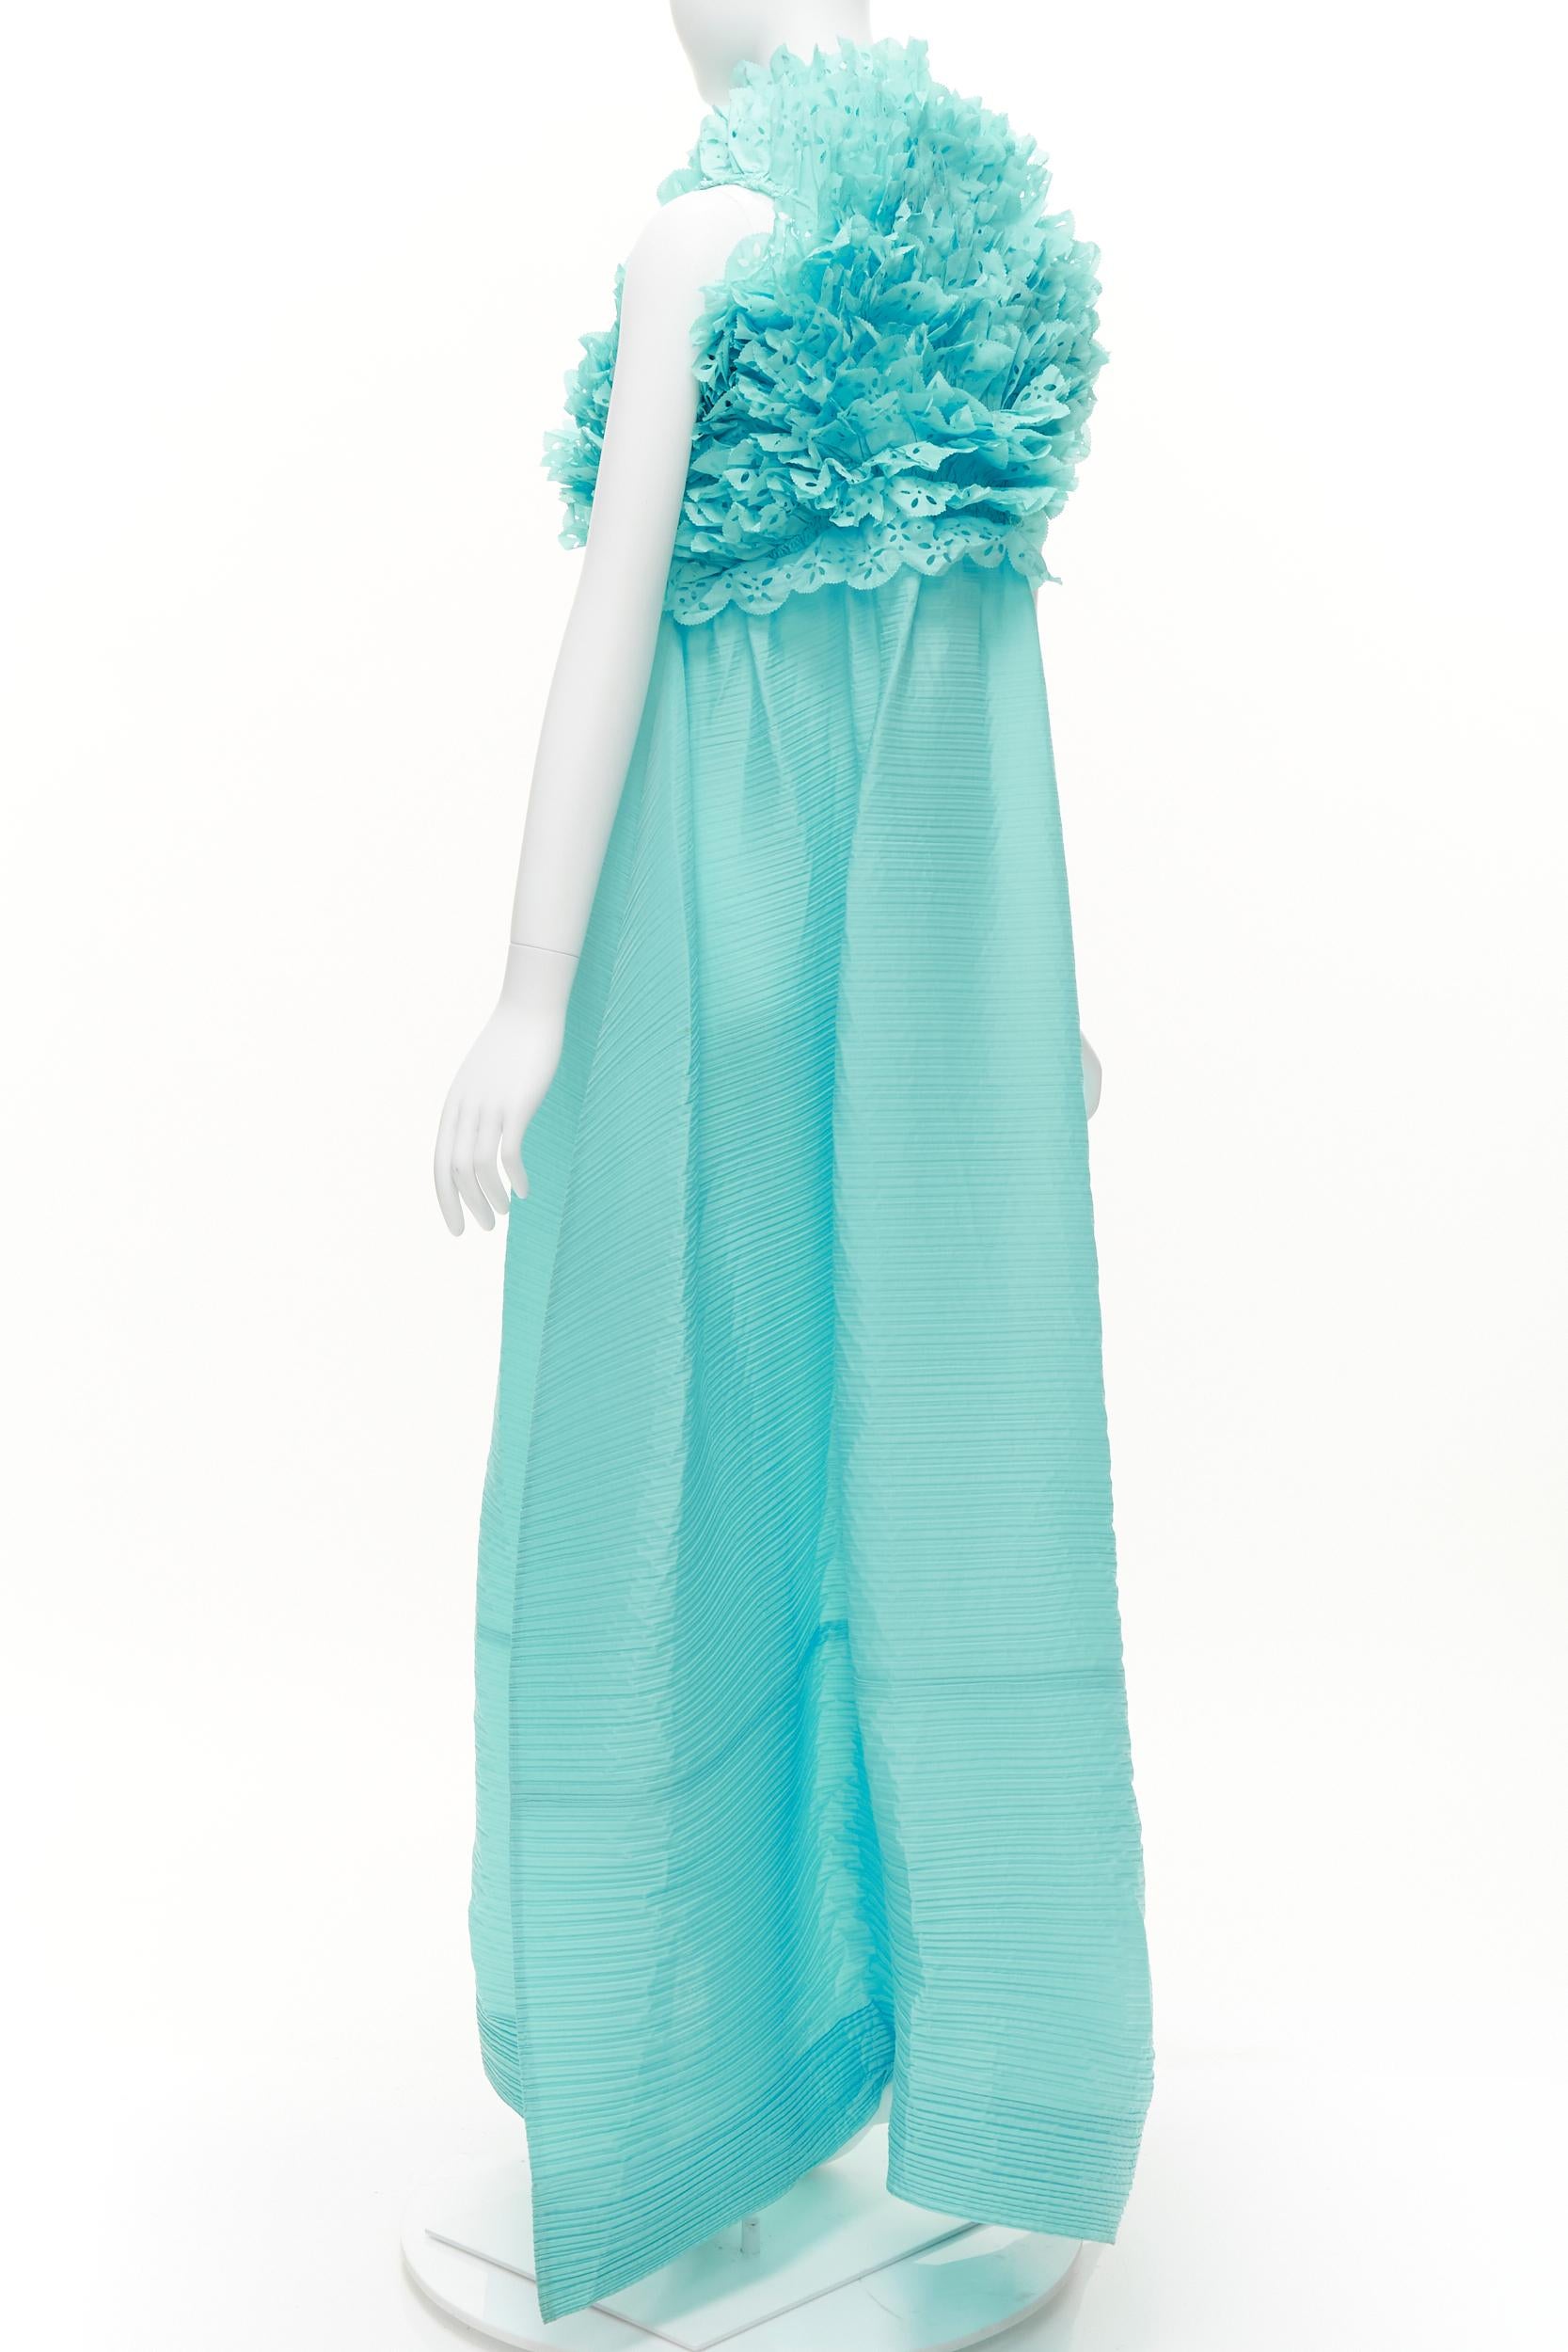 rare ISSEY MIYAKE sky blue laser cut ruffle high neck evening gown dress M 2